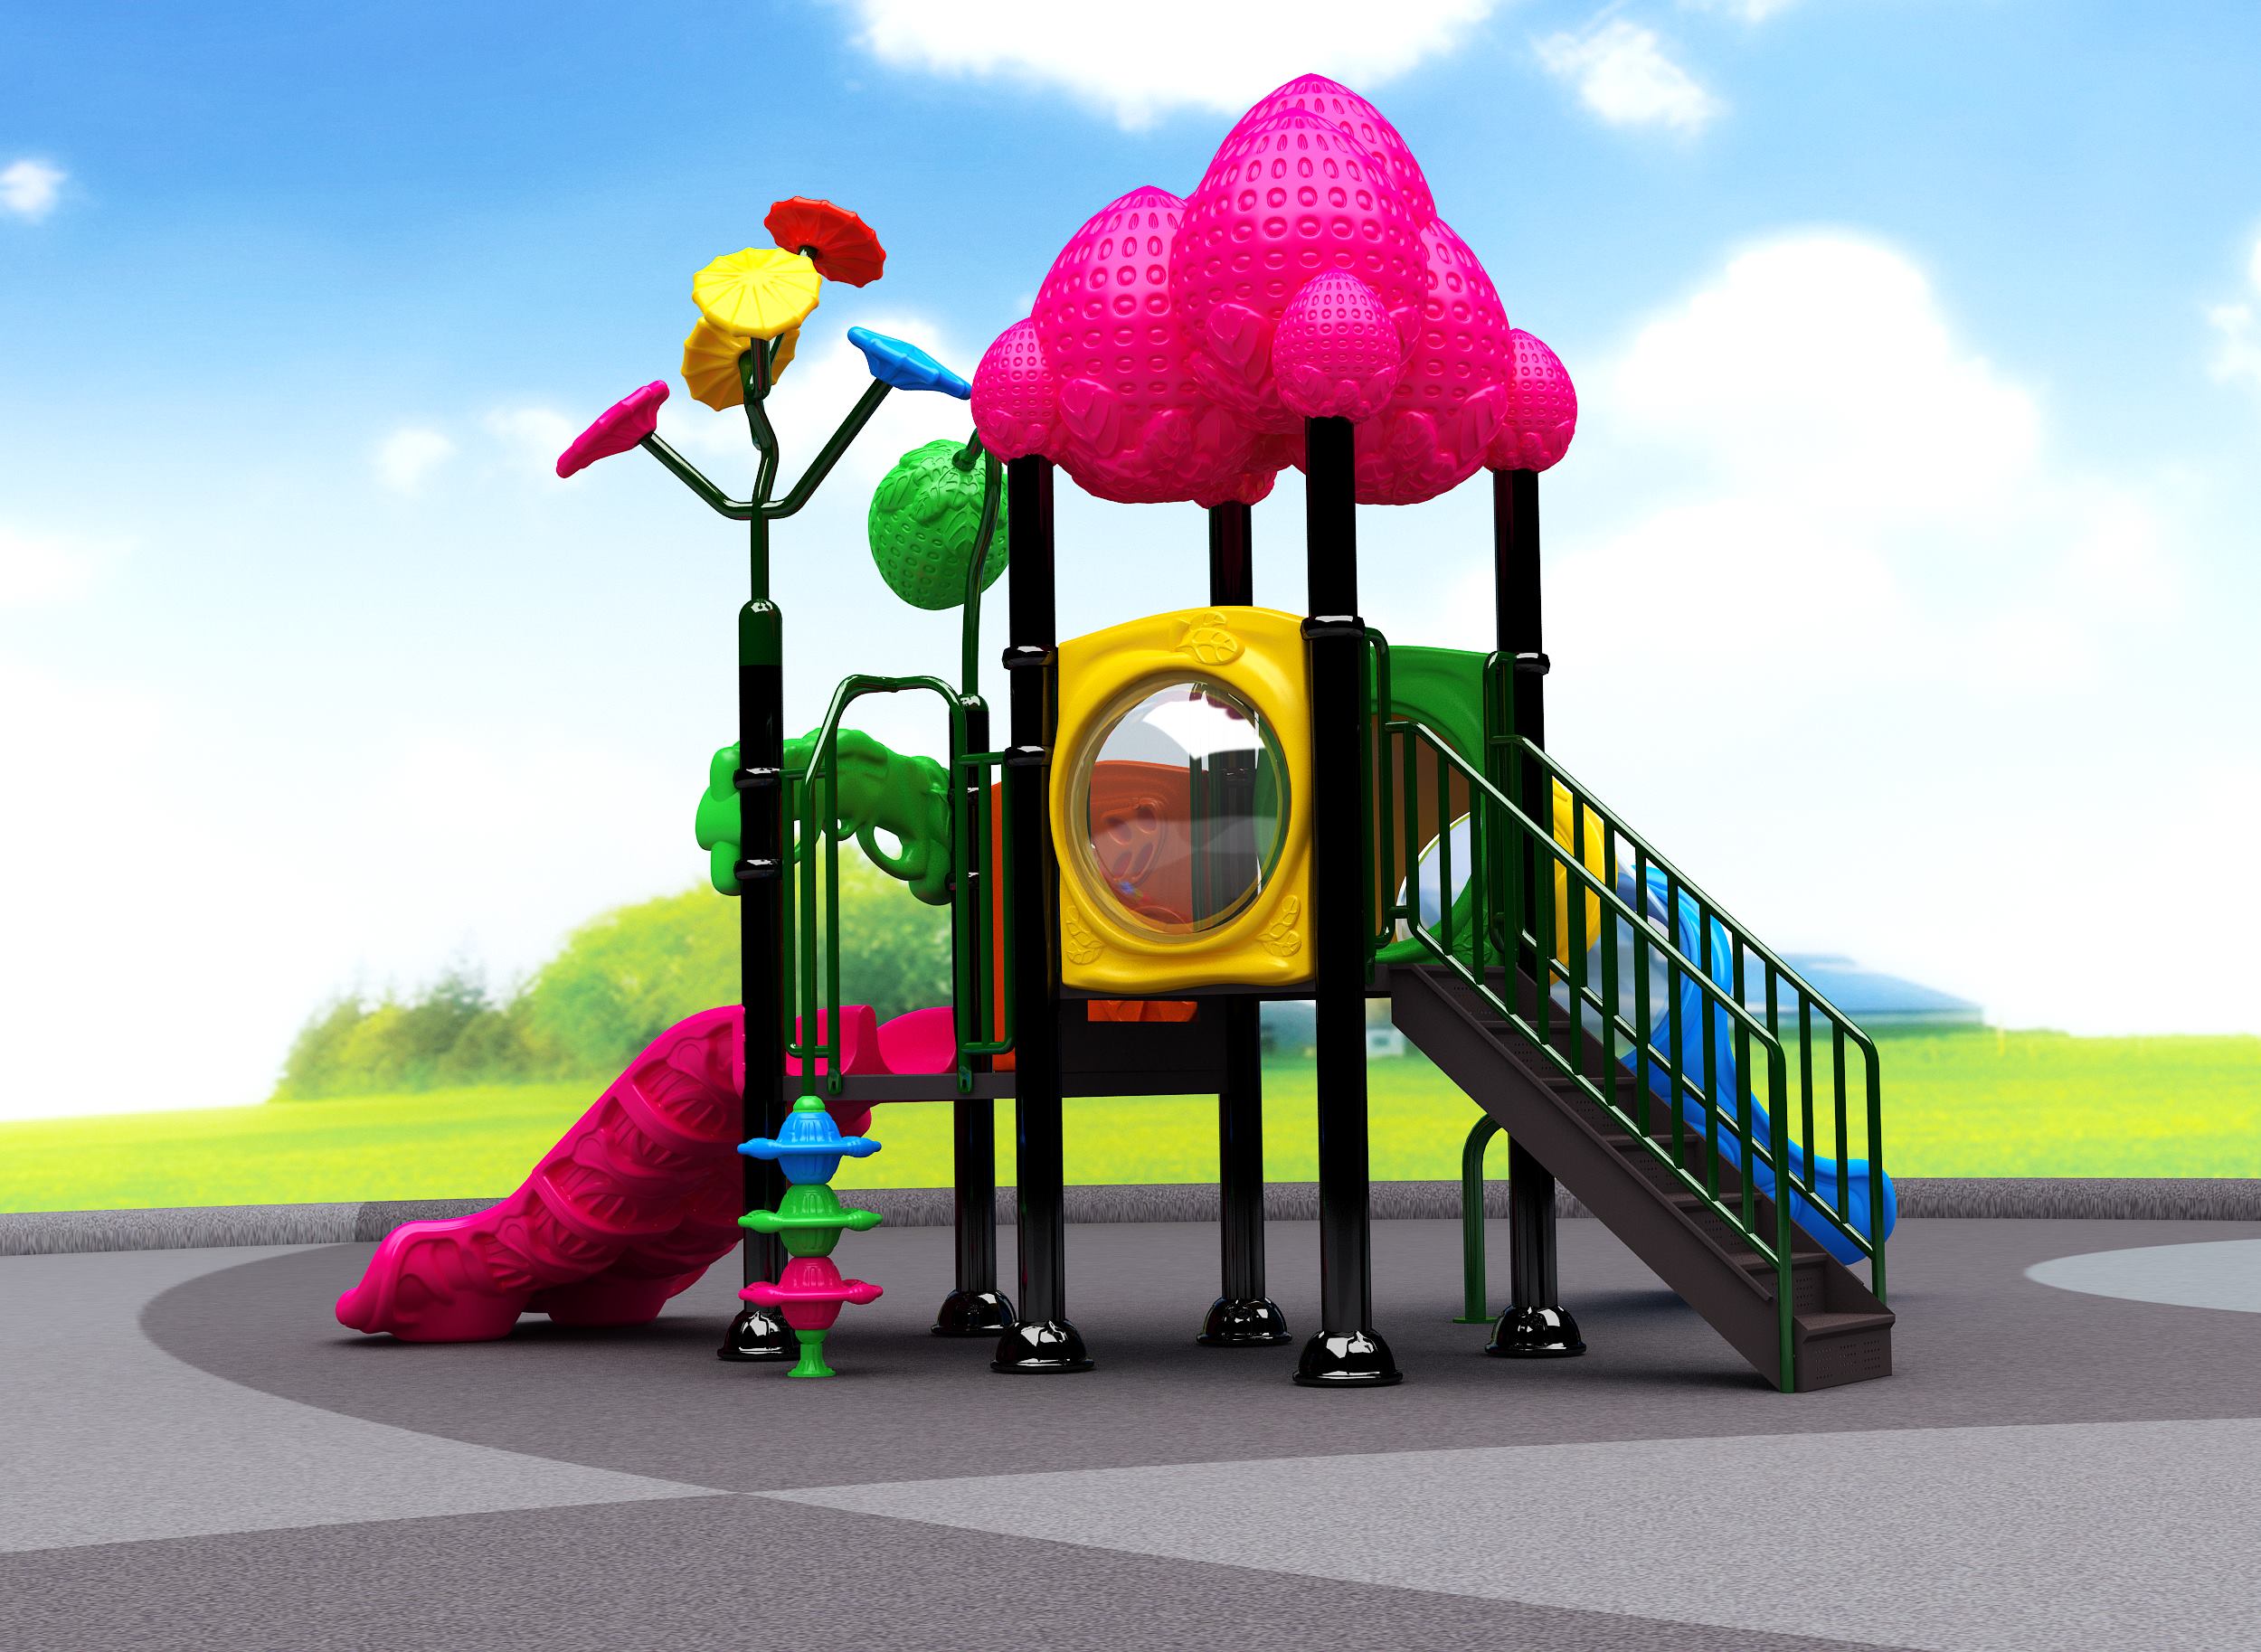 SOZA PlayGround parques infantiles juegos para niños parques plásticos parques plasticos parques infantiles bogota parques infantiles bogotá parques infantiles colombia